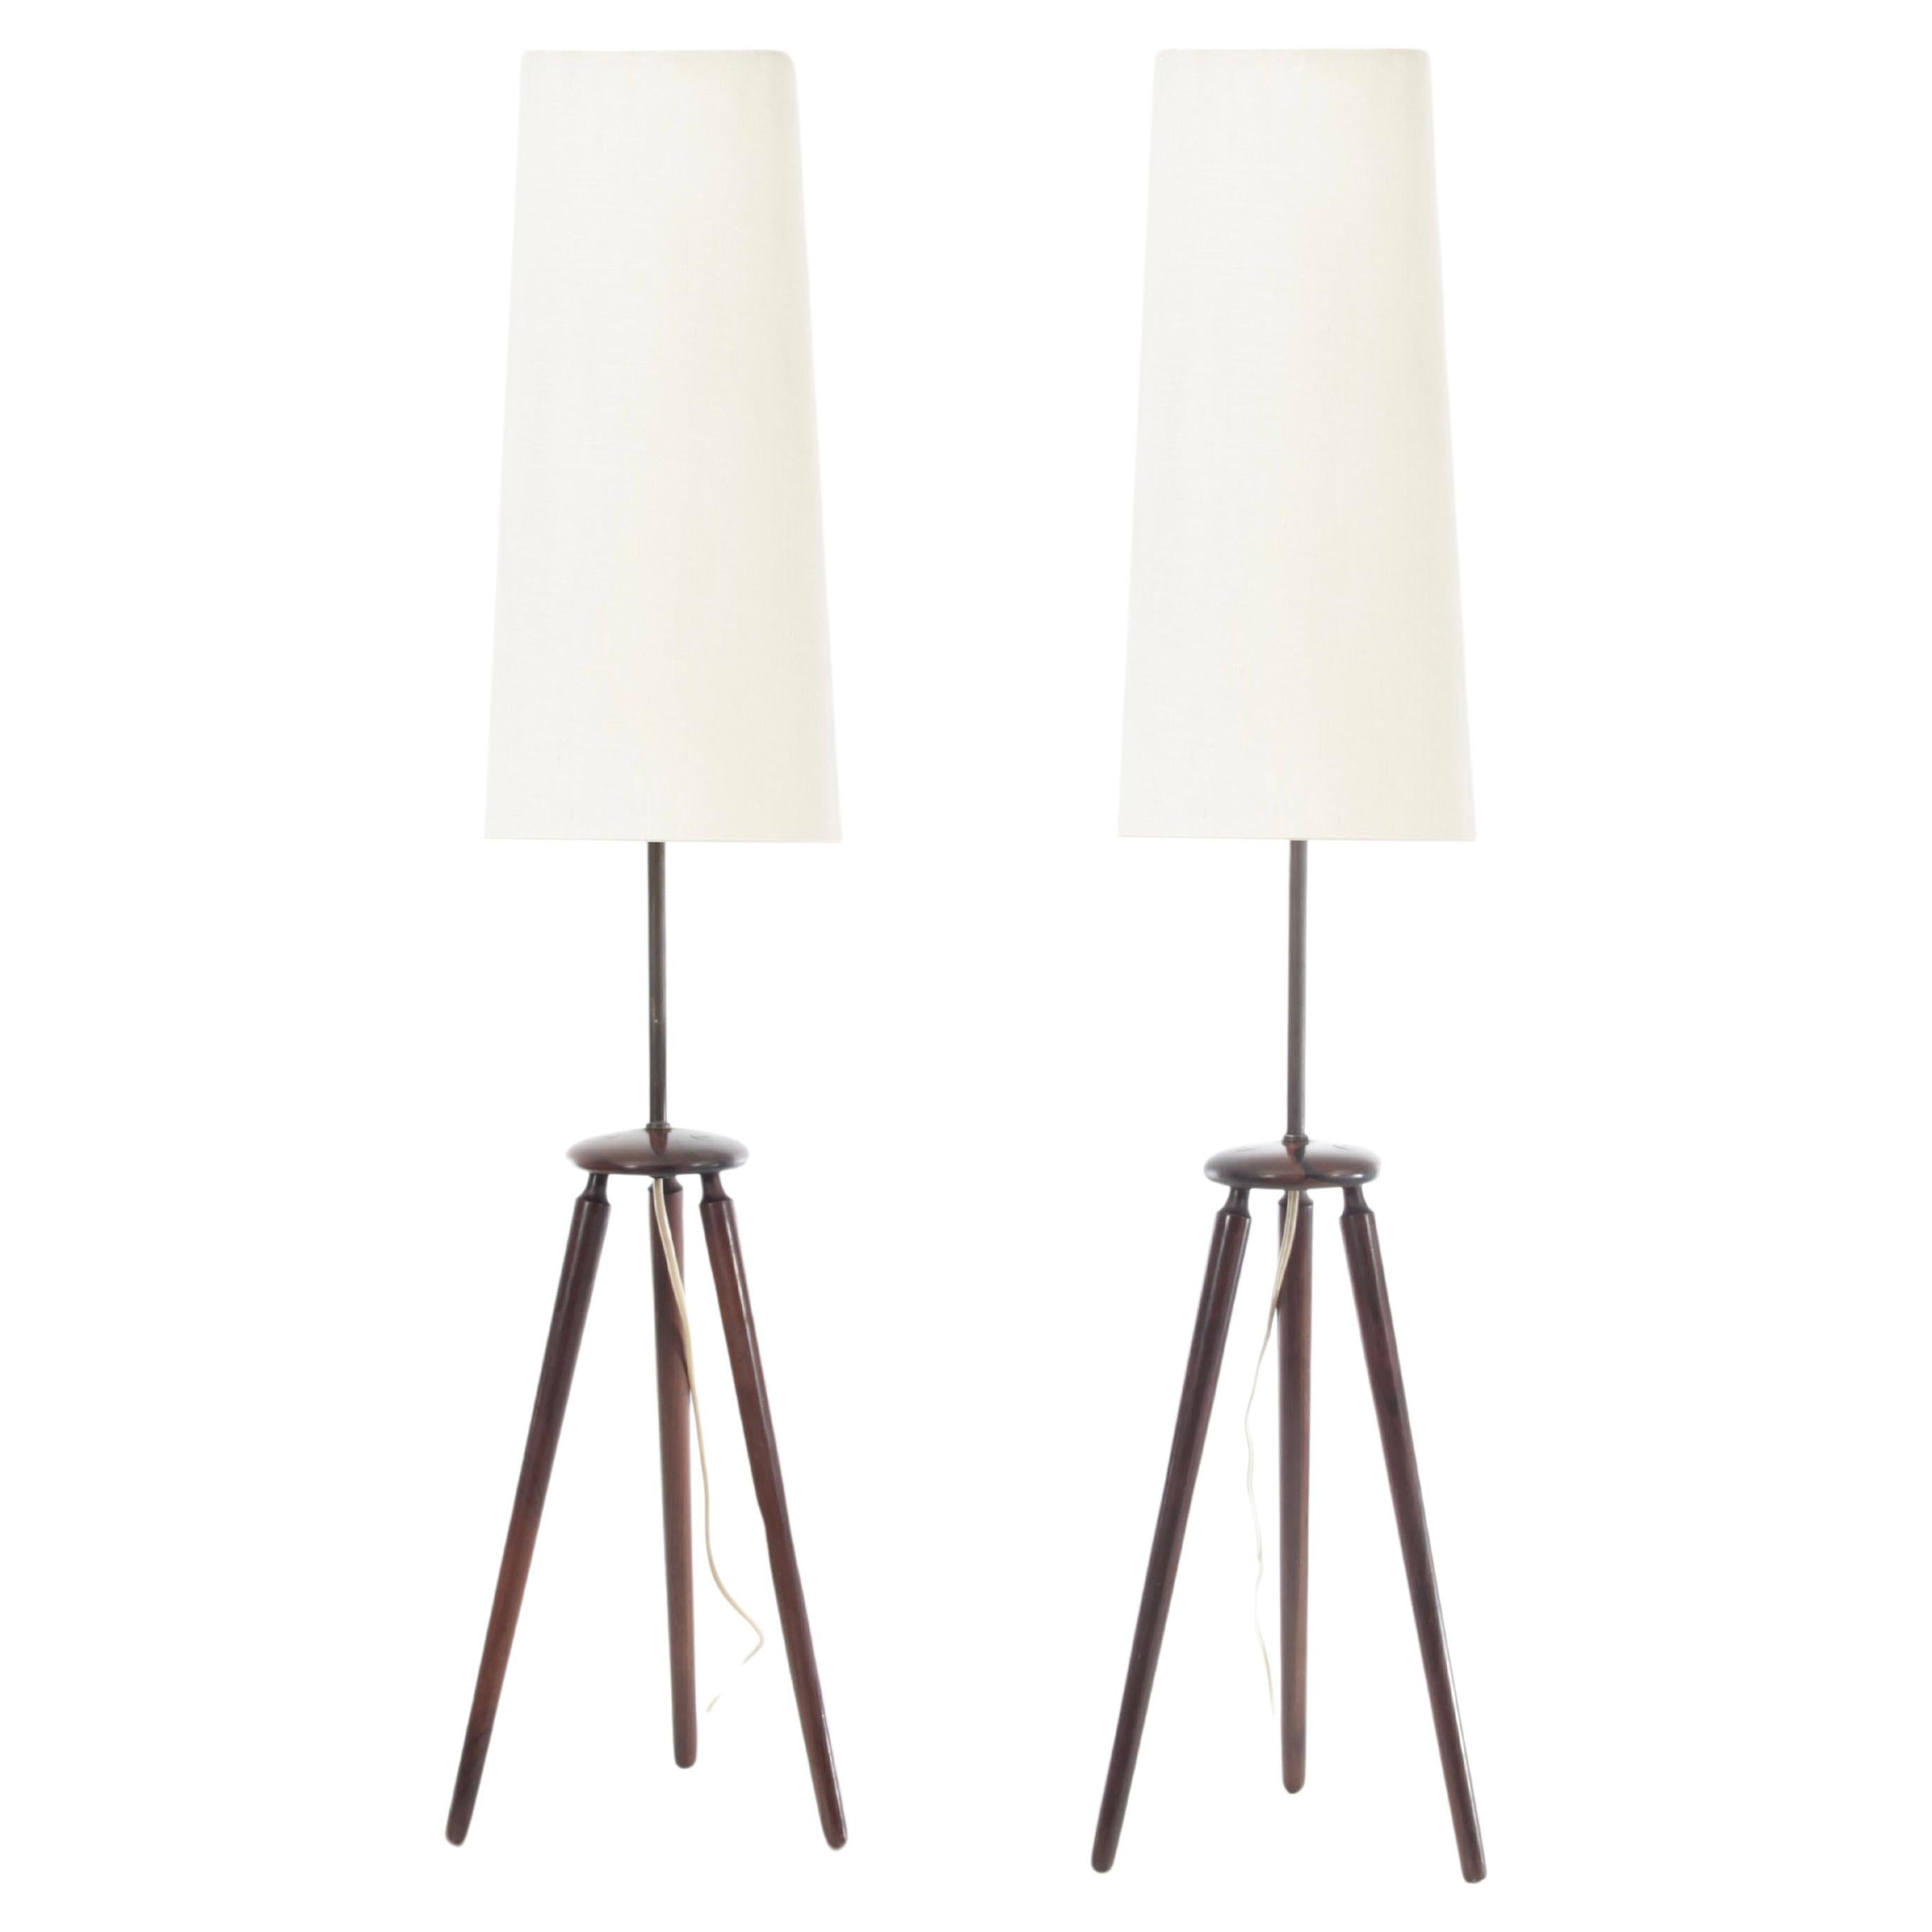 Mid century modern scandinavian pair of table lamp in rosewood